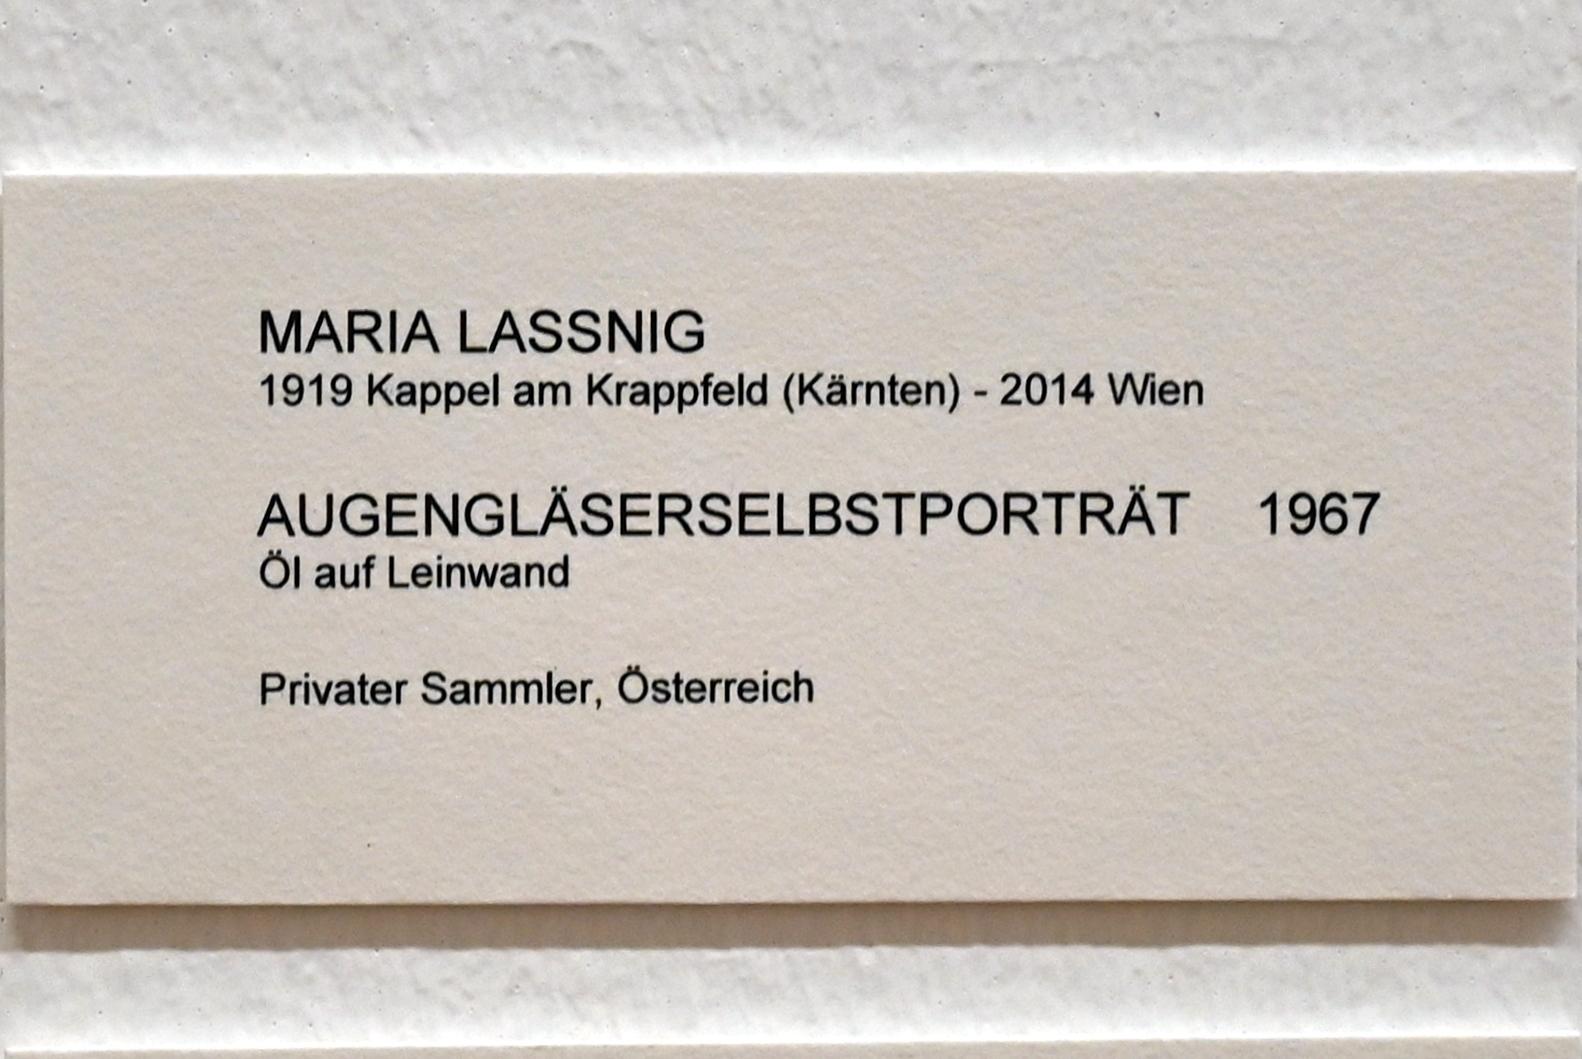 Maria Lassnig (1945–2011), Augengläserselbstporträt, Bonn, Kunstmuseum, Ausstellung "Maria Lassnig - Wach bleiben" vom 10.02. - 08.05.2022, Saal 3, 1967, Bild 2/2